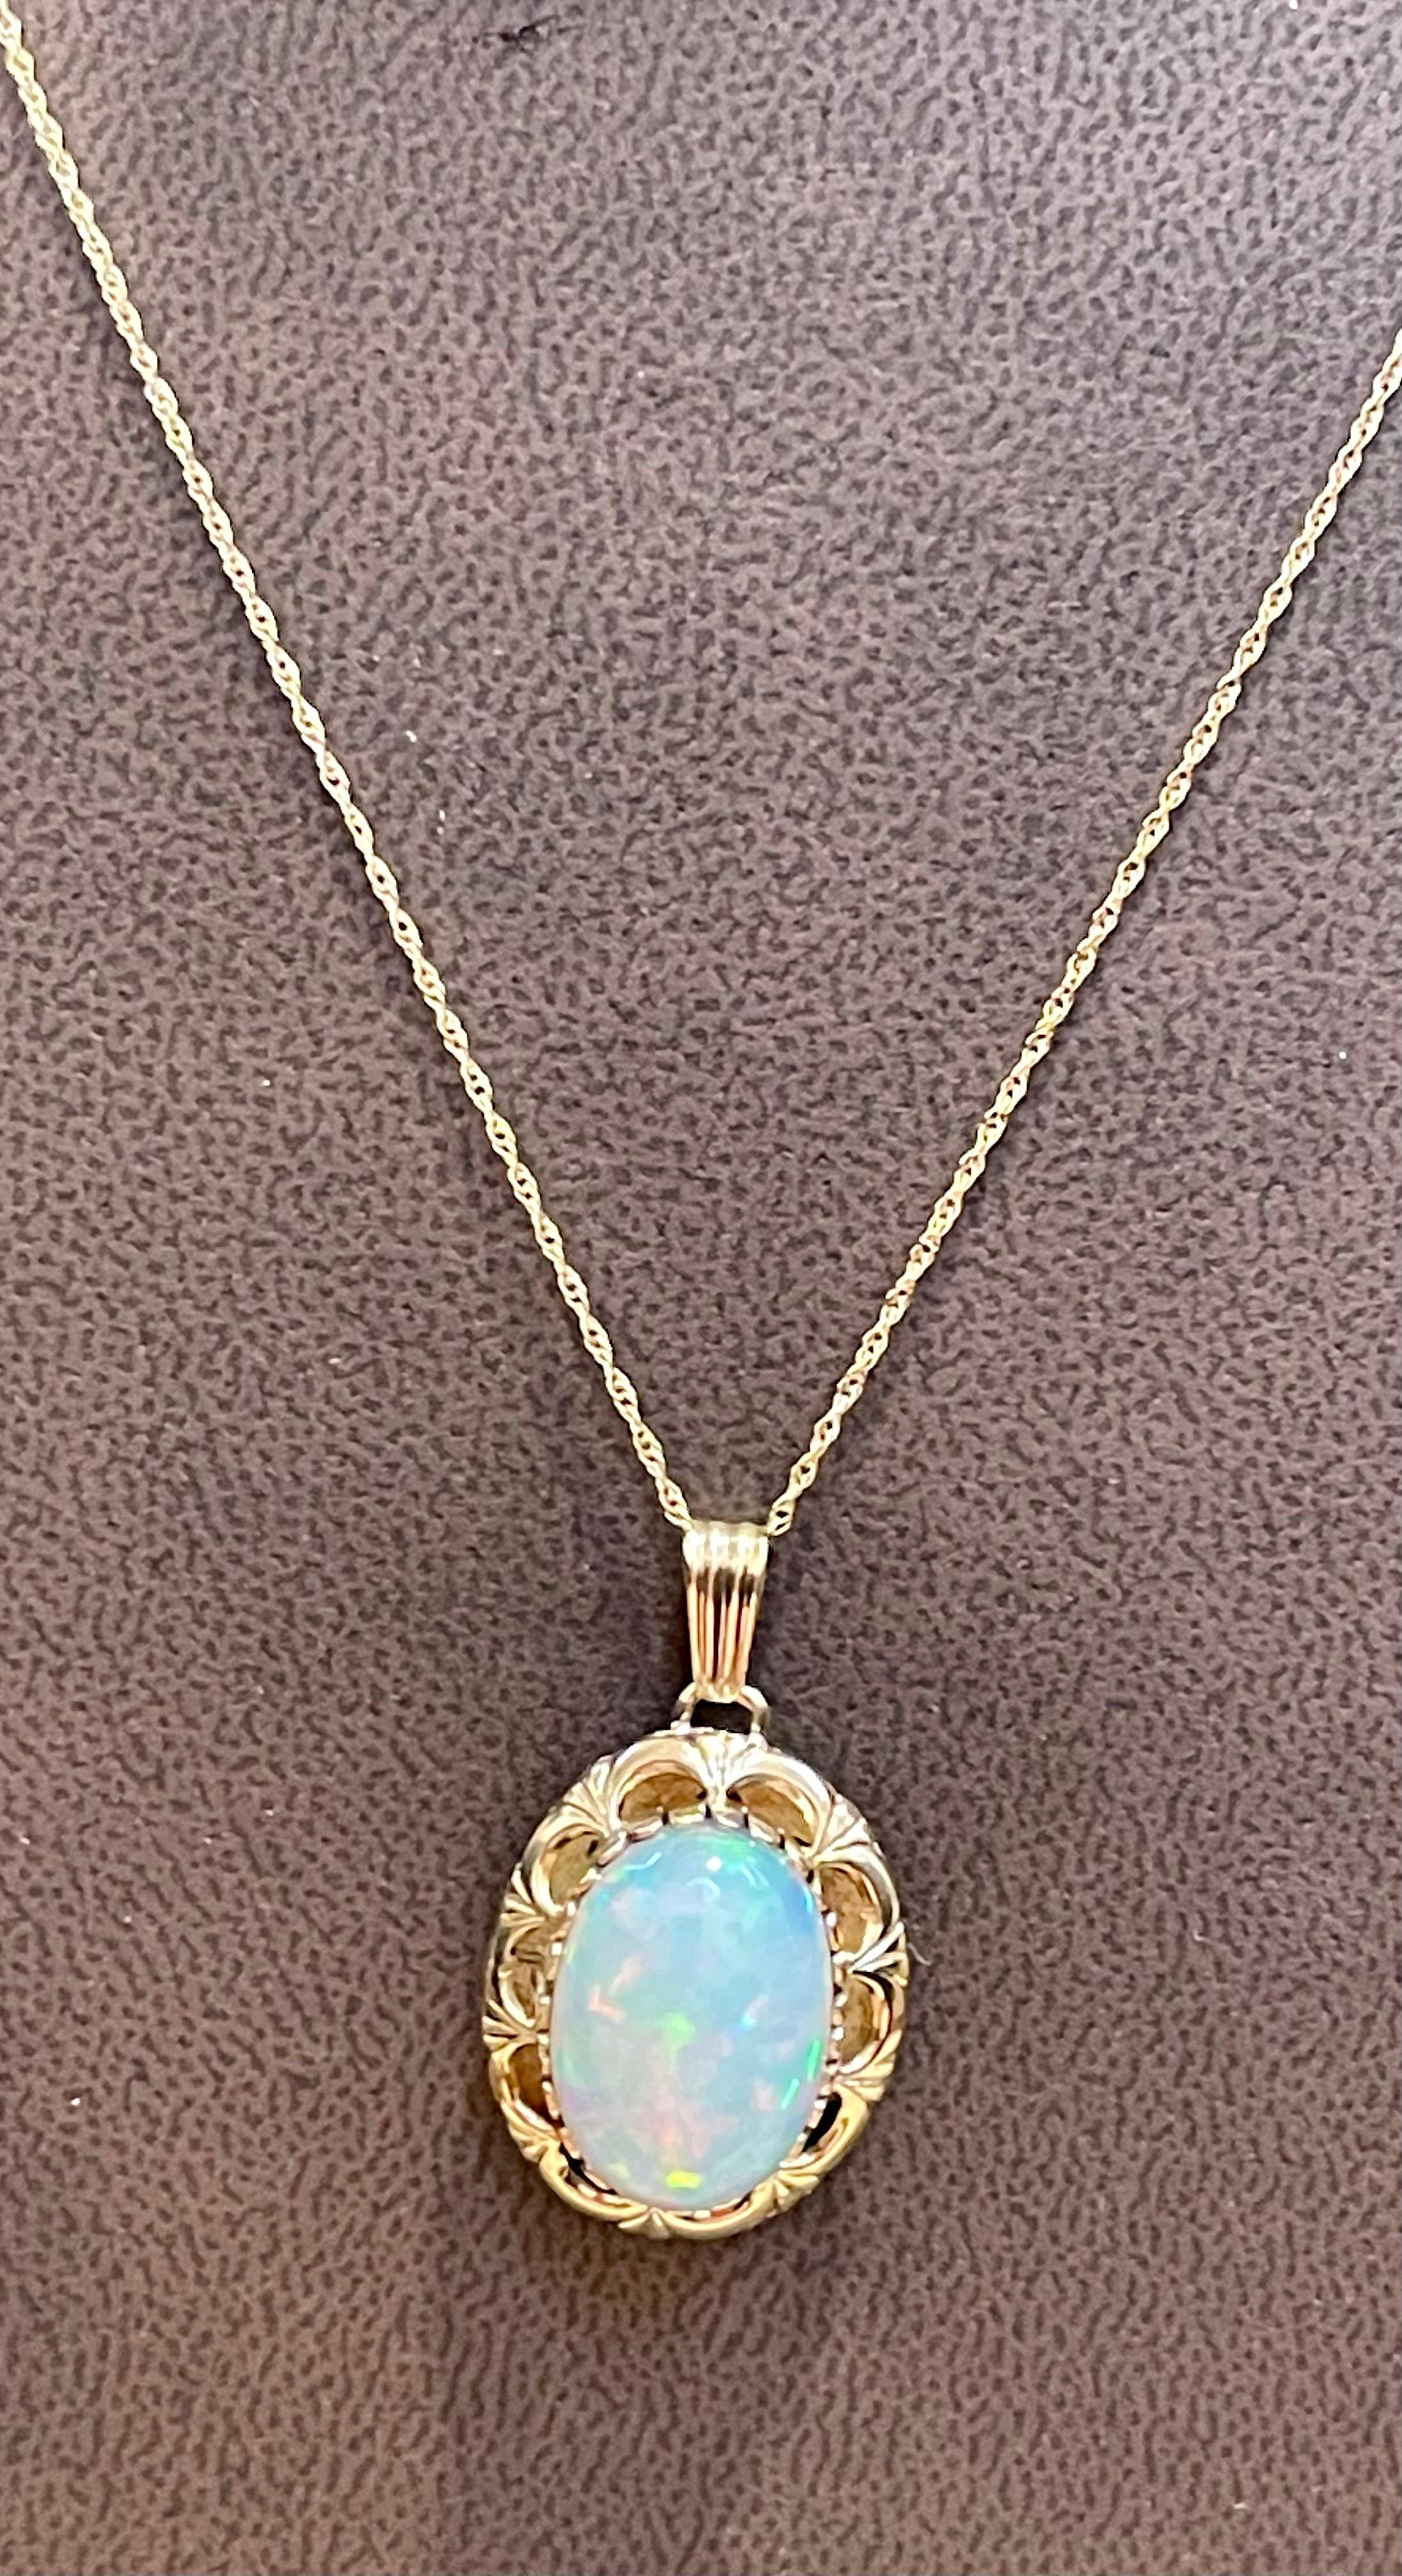 8 Carat Oval Ethiopian Opal Pendant / Necklace 14 Karat Yellow Gold Necklace 1